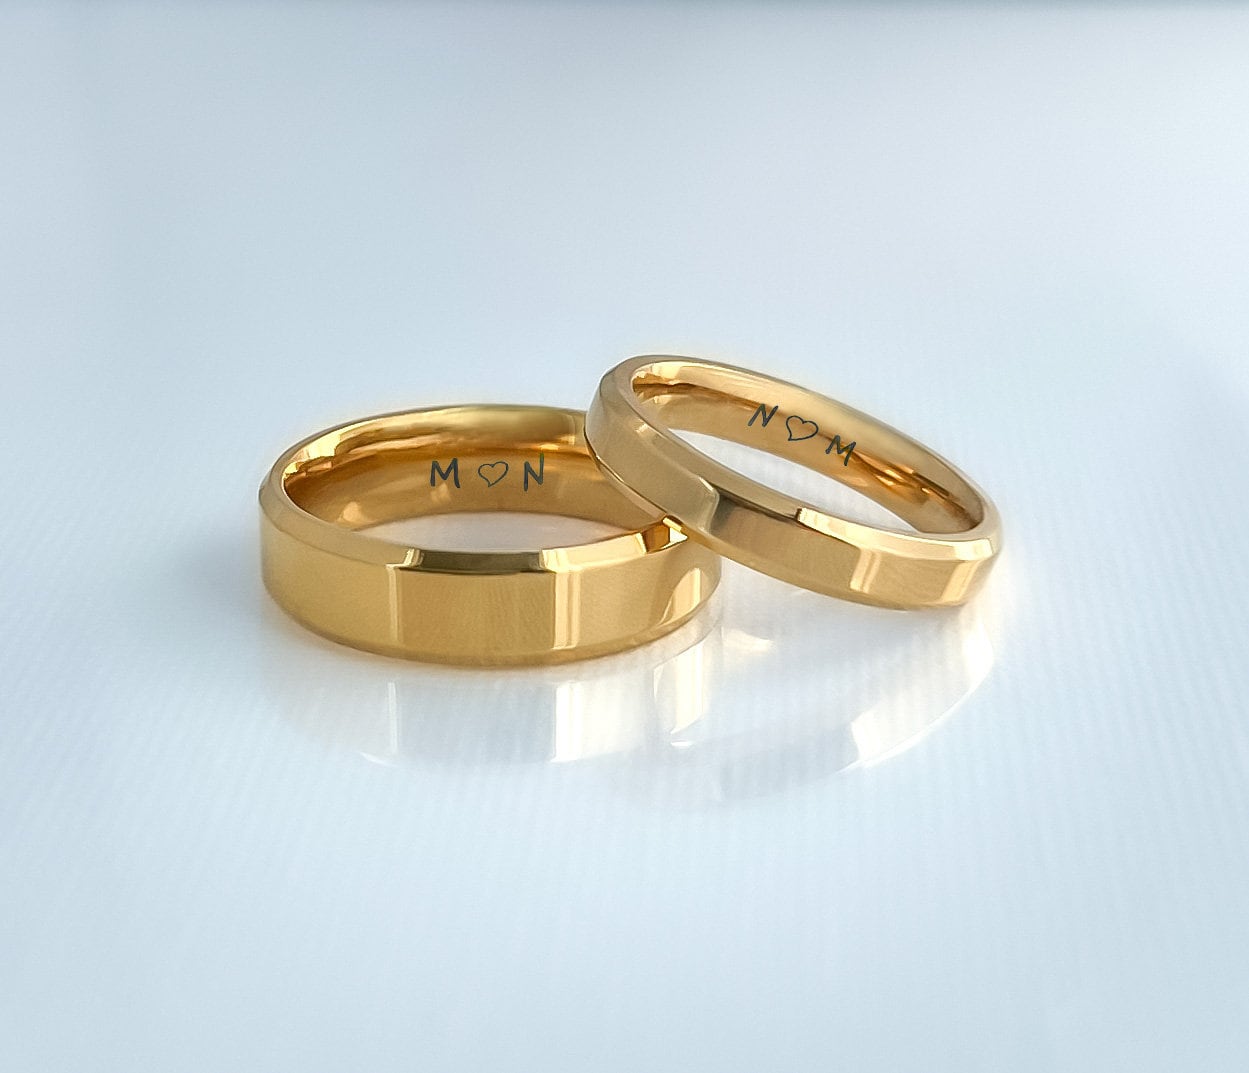 Hot Stainless steel GOLD shinning zircon Love Couple Rings Wedding Rings Set  | eBay